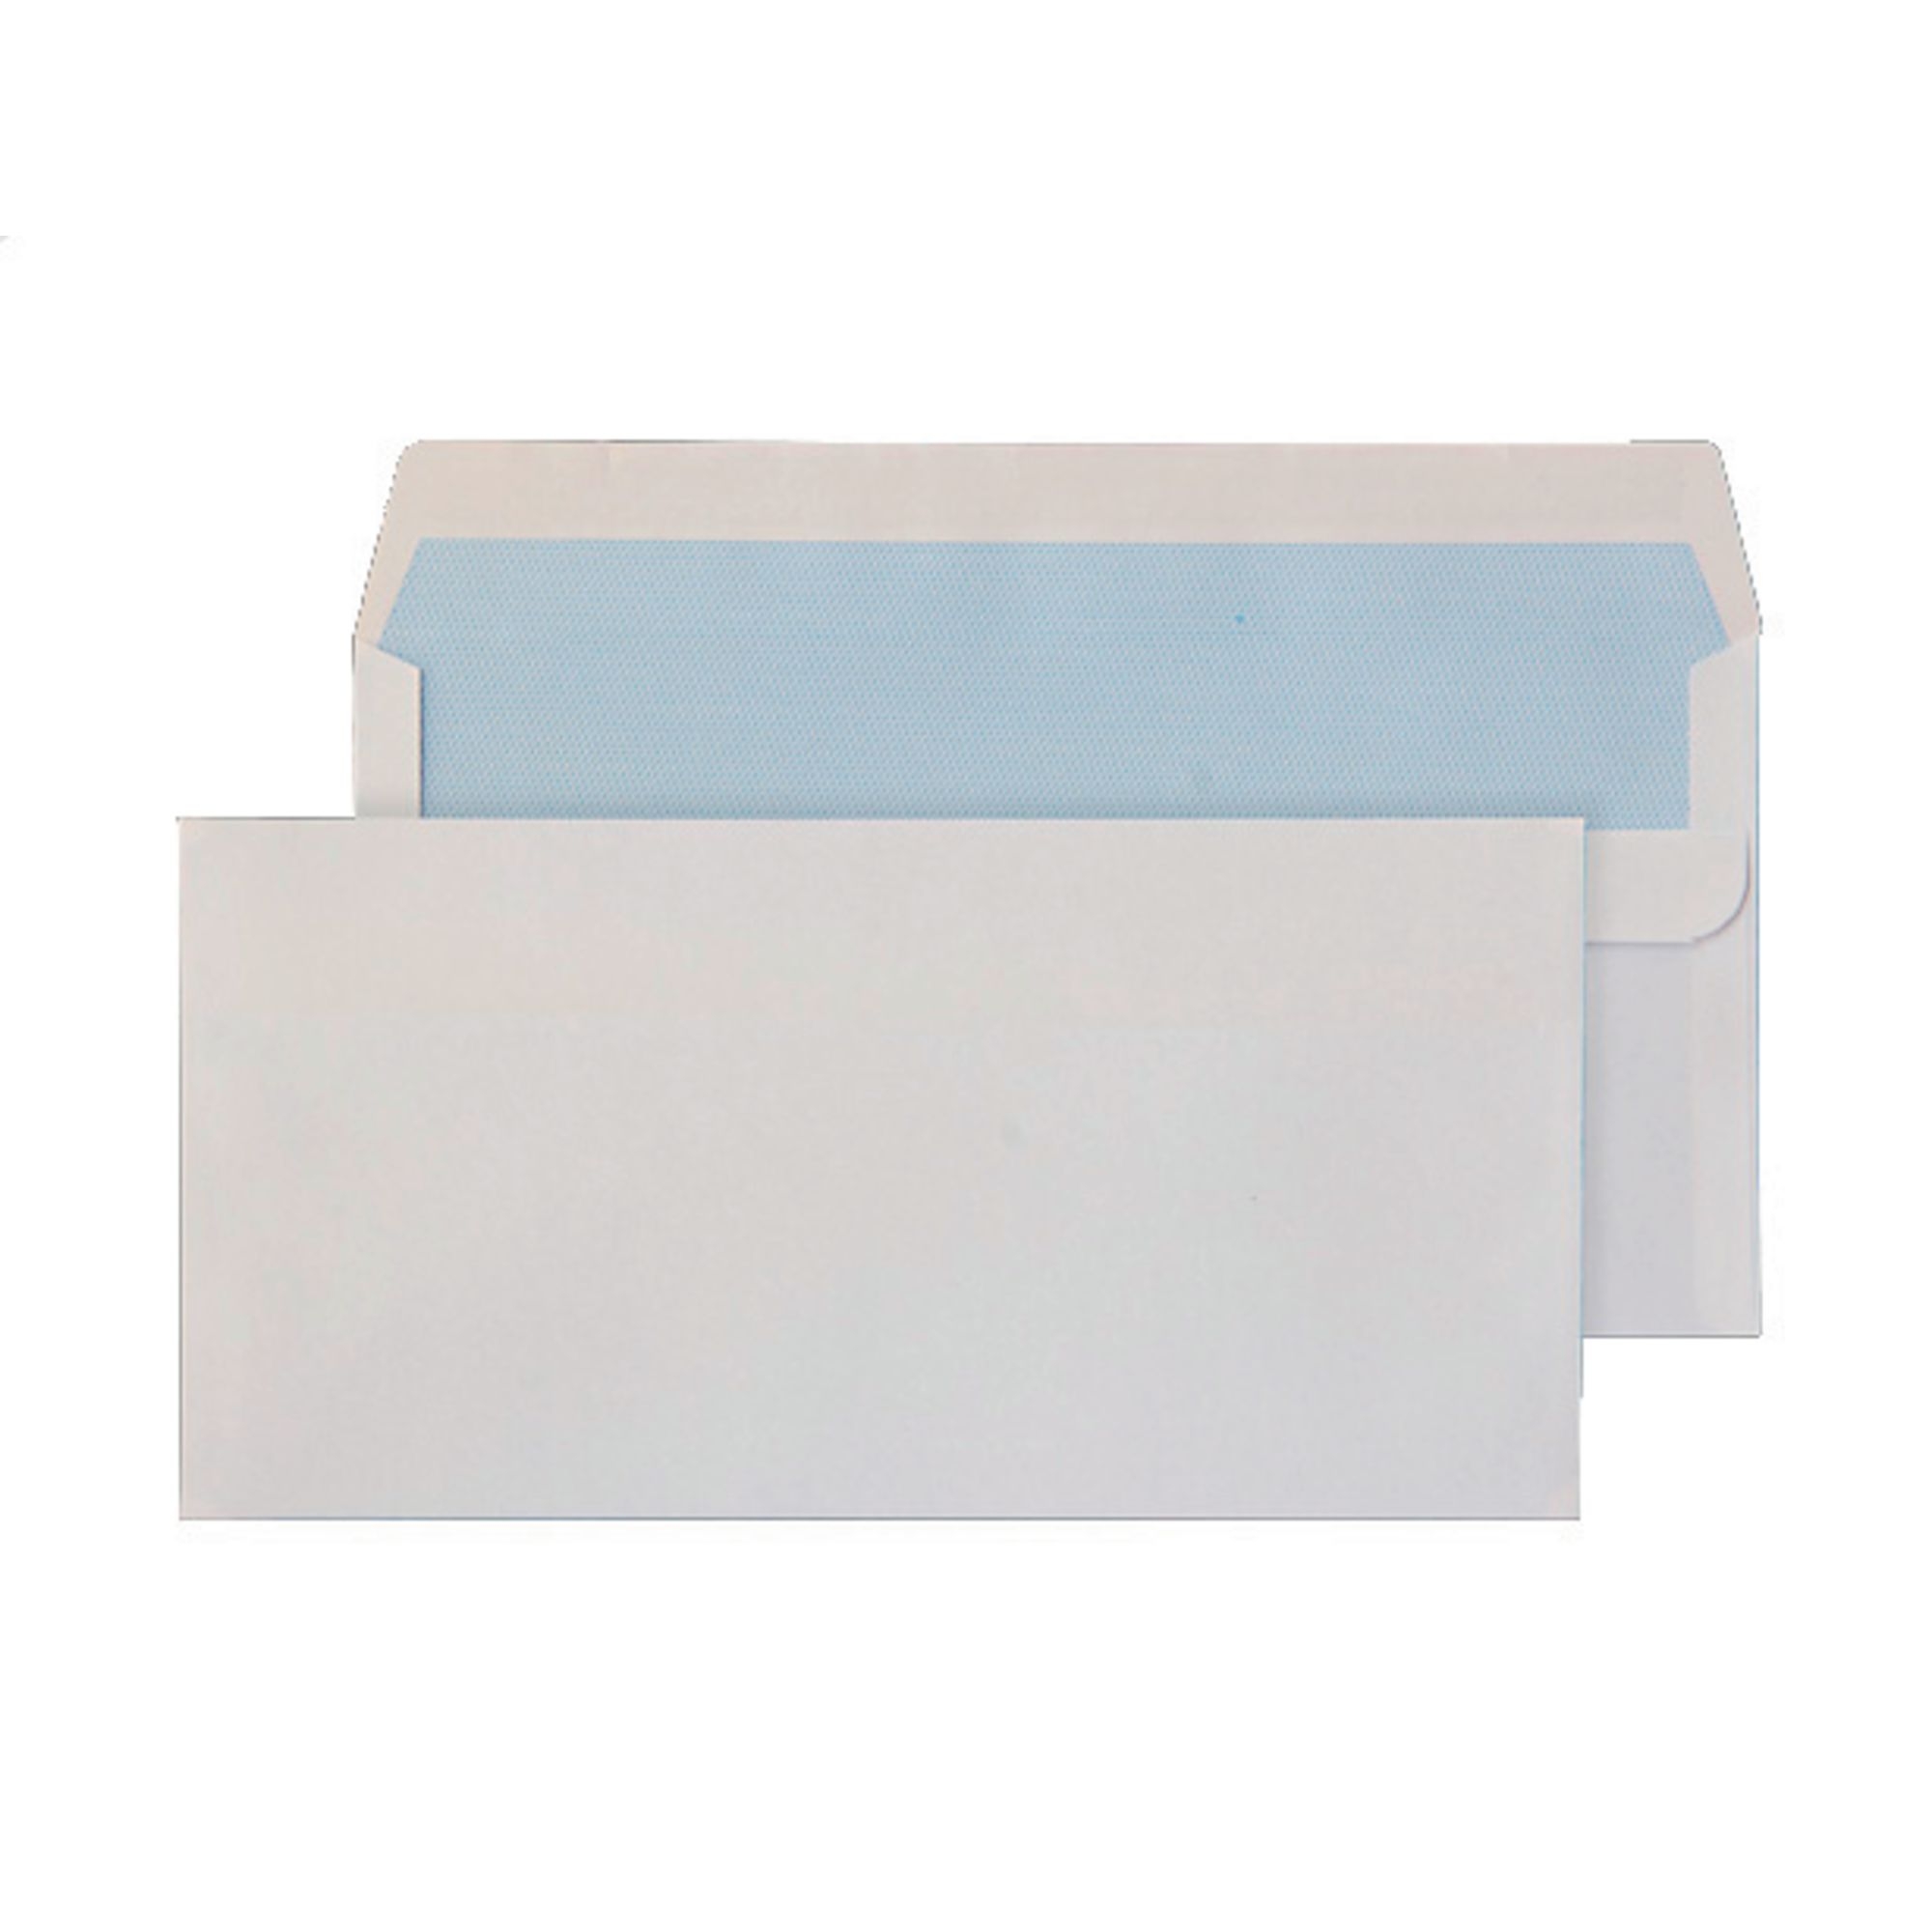 DL White Self Seal Wallet Envelopes - Pack of 50